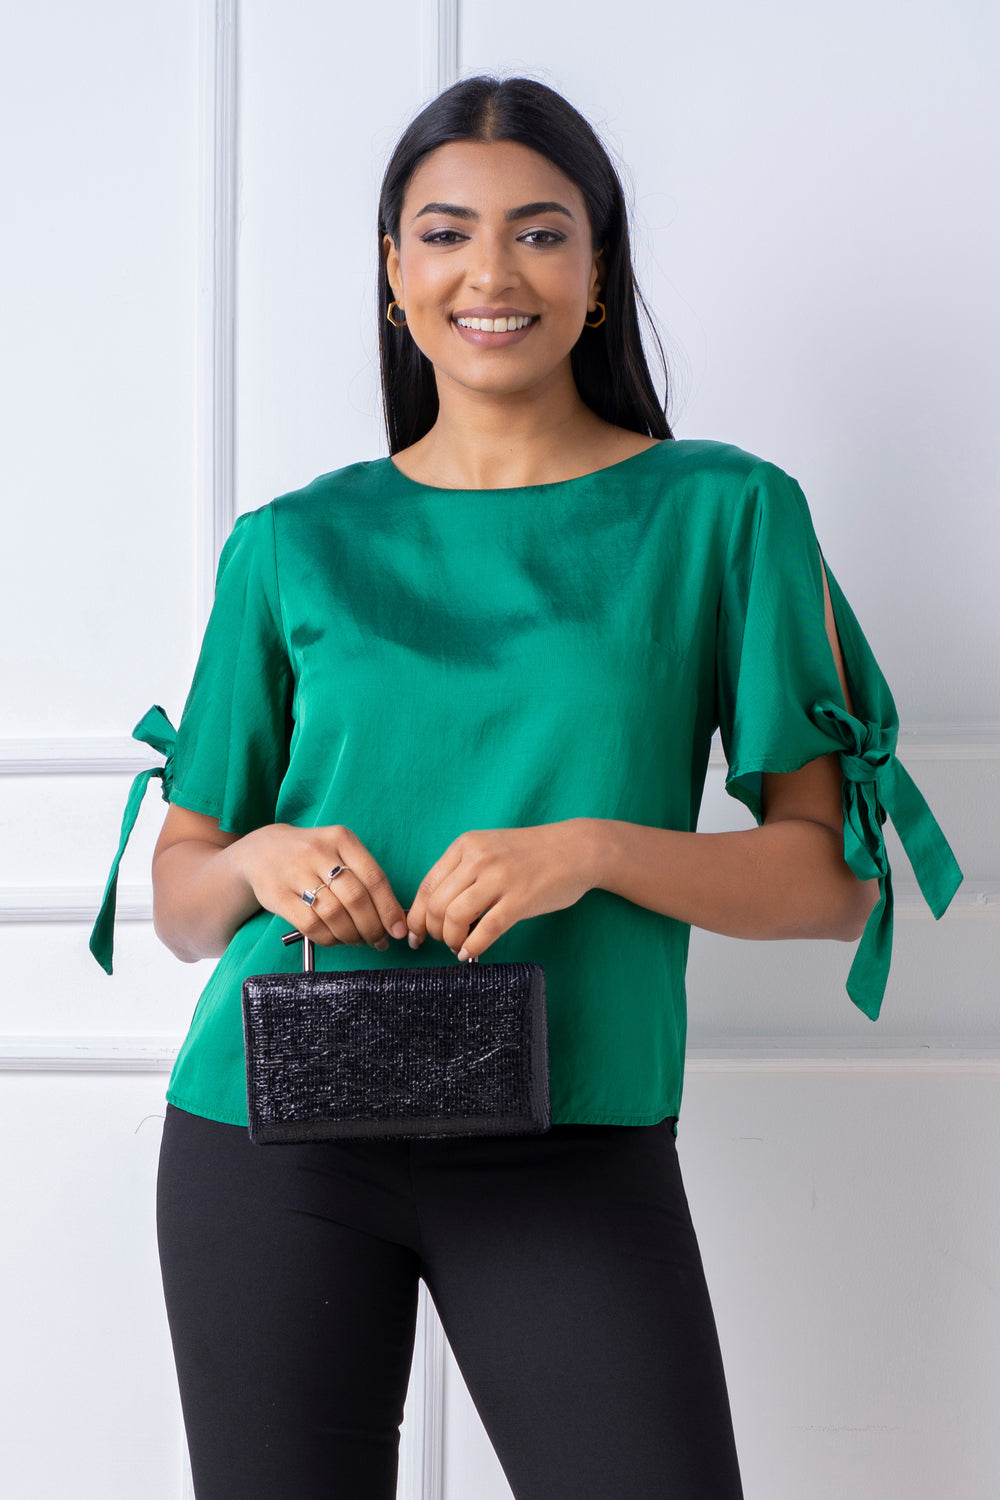 Green Sleeve Tie Top - Regular Fit, Top, New Arrivals, Office Tops, Regular Fit, Round Neck, Short Sleeves, Smart Casual, Smart Casual Top, Work Top, workwear - MONDY, Sri Lankan women's clot